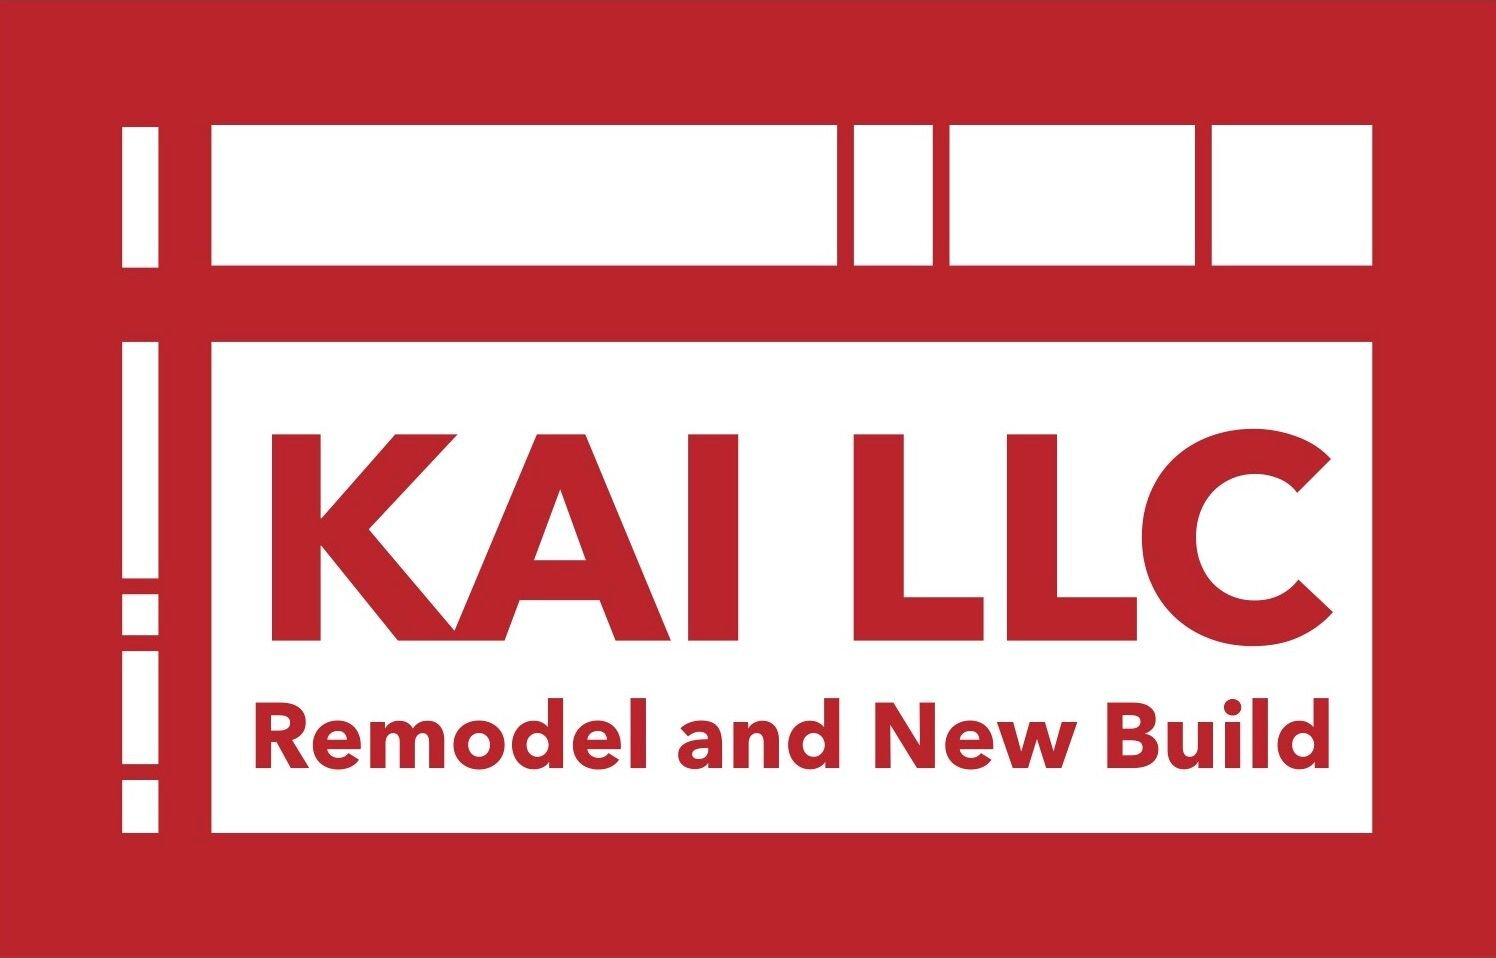 KAI LLC company logo